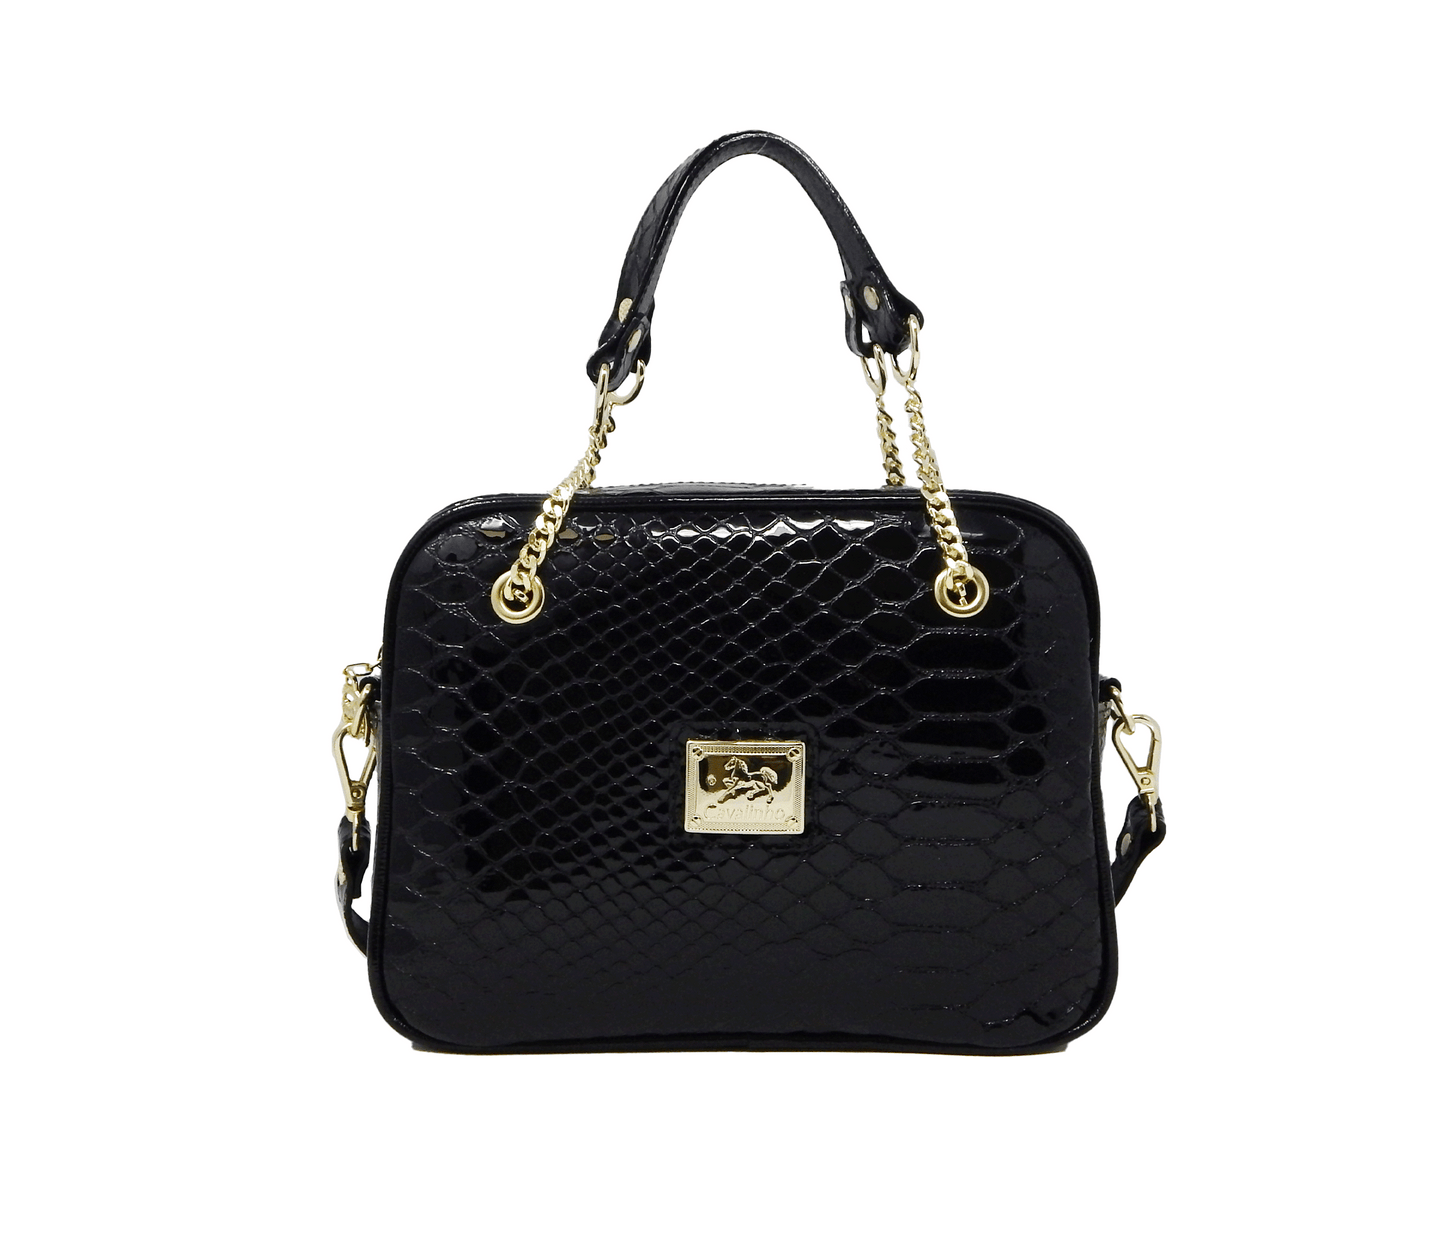 #color_ Black | Cavalinho Gallop Patent Leather Handbag - Black - 18170512.01_1